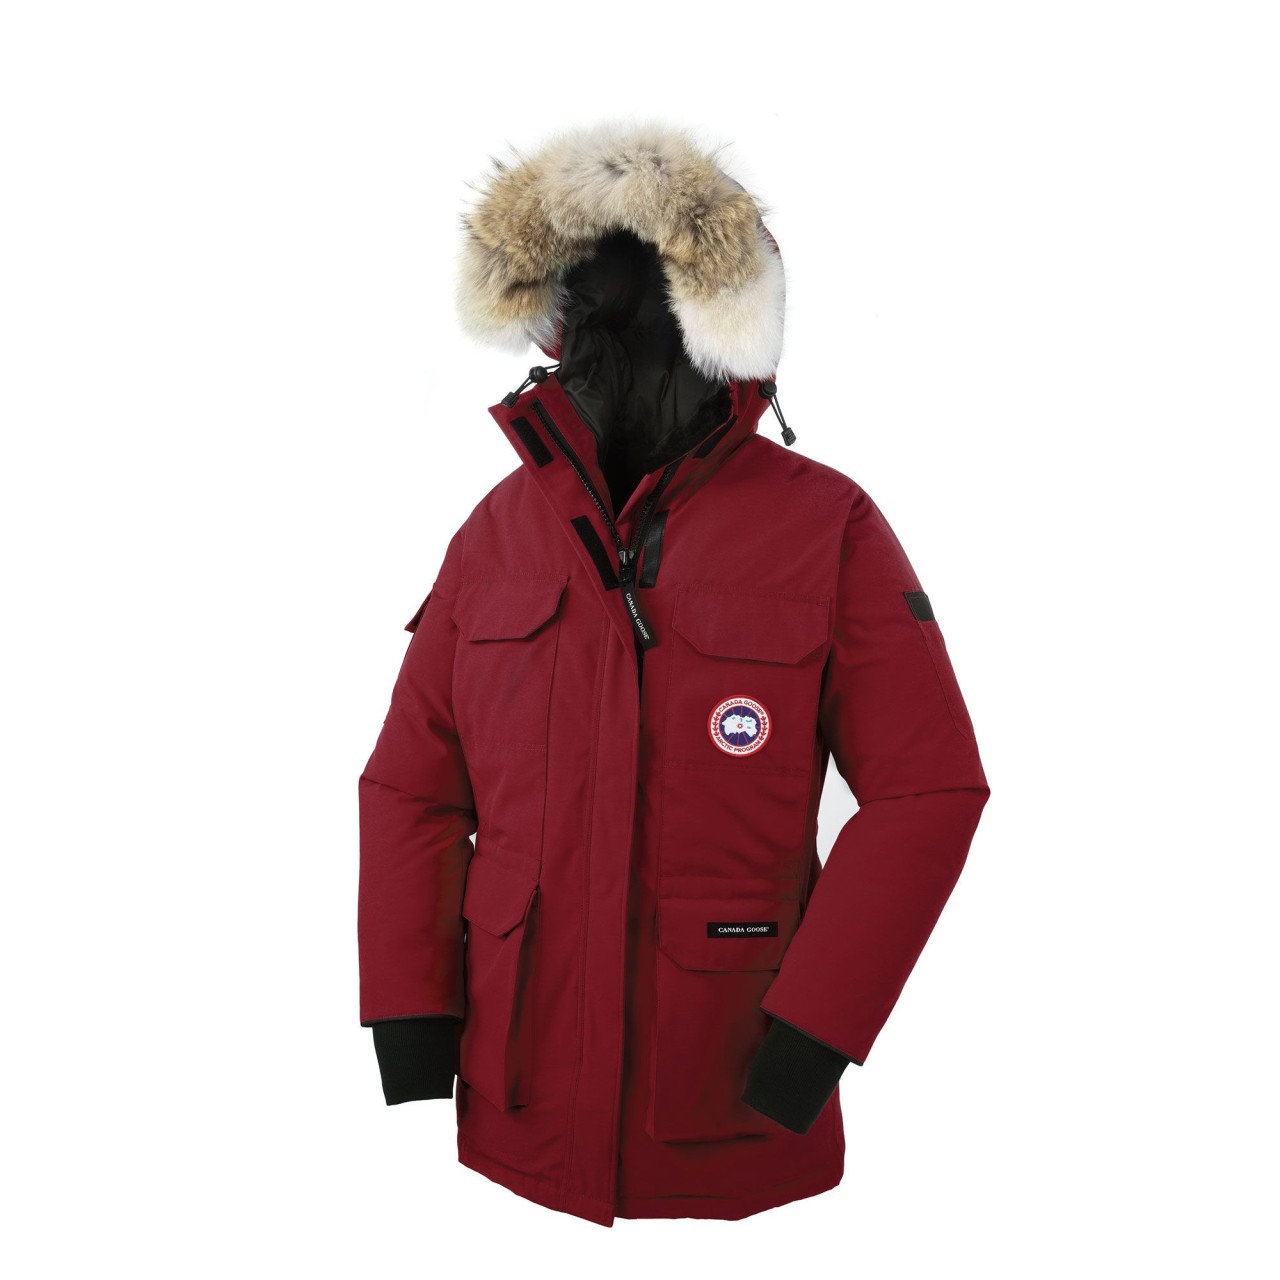 Canada Goose kensington parka replica 2016 - canada goose jacket sale | canada goose jackets outlet store